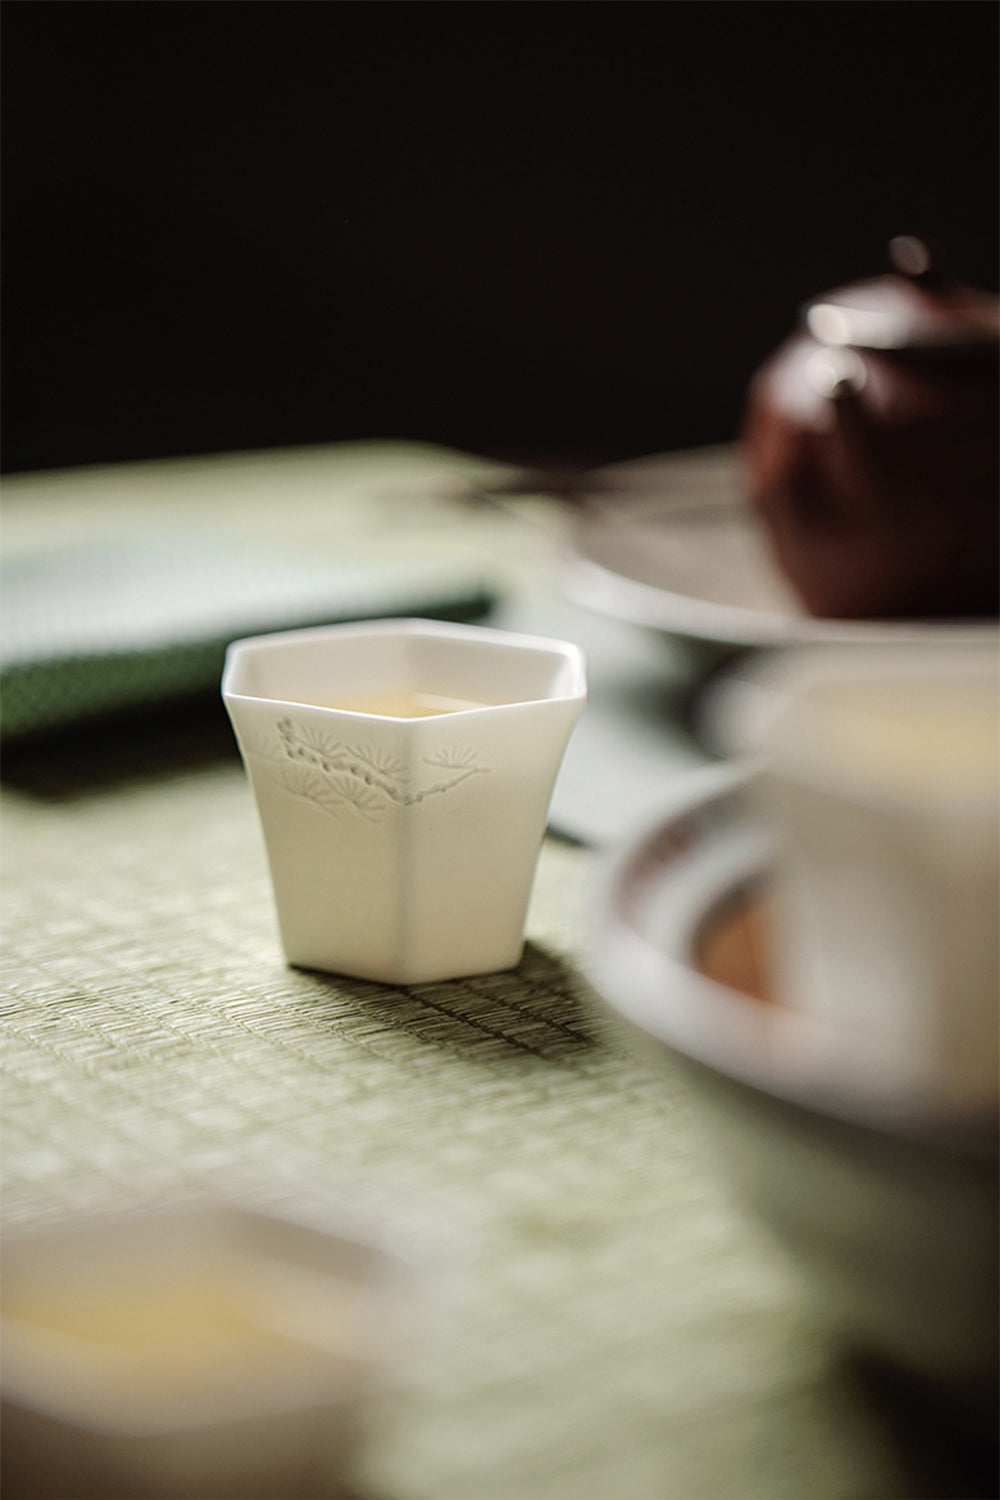 IwaiLoft 白玉 八方杯 2個セット 茶杯 茶器 湯のみ 湯呑み お茶 カップ コップ 来客用 お茶用品 ティーウェア 中国茶器 台湾茶器 贈り物にも 食洗機対応 電子レンジ対応